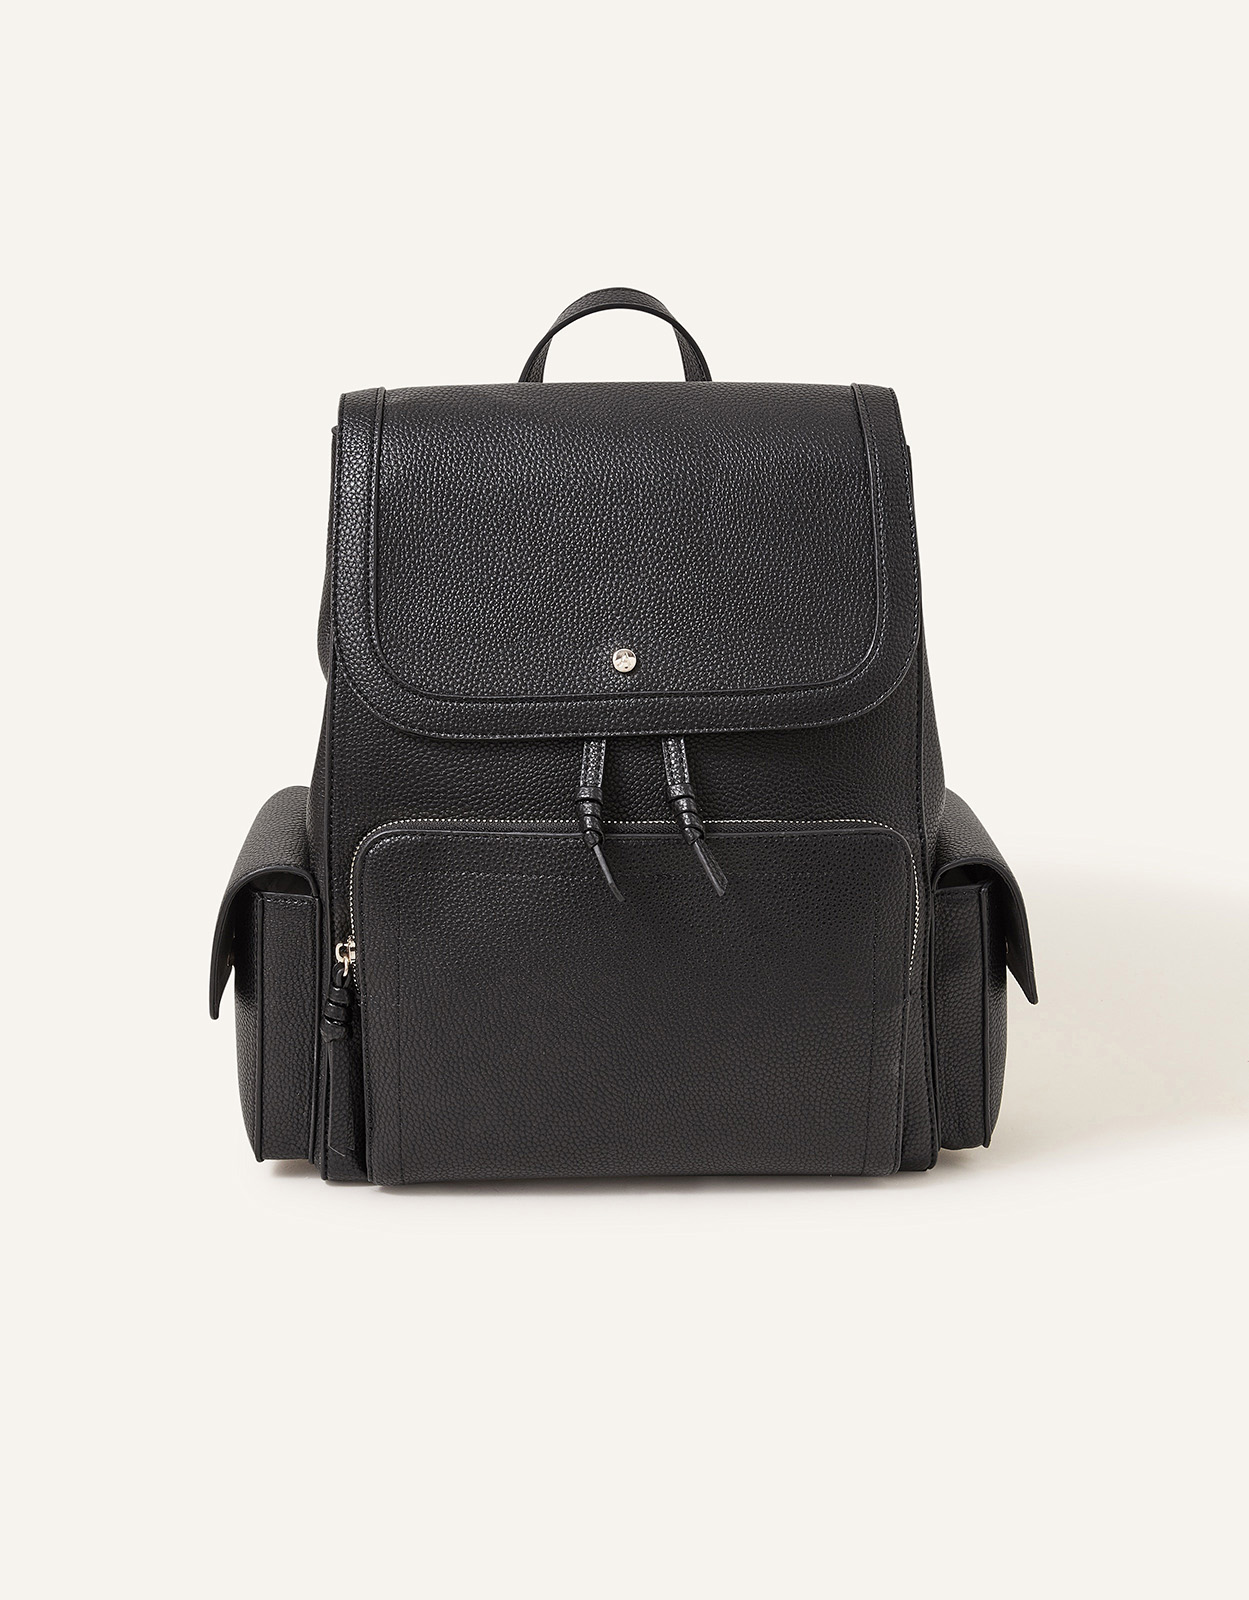 Accessorize Black Multi Pocket Laptop Backpack, Size: 35x29cm